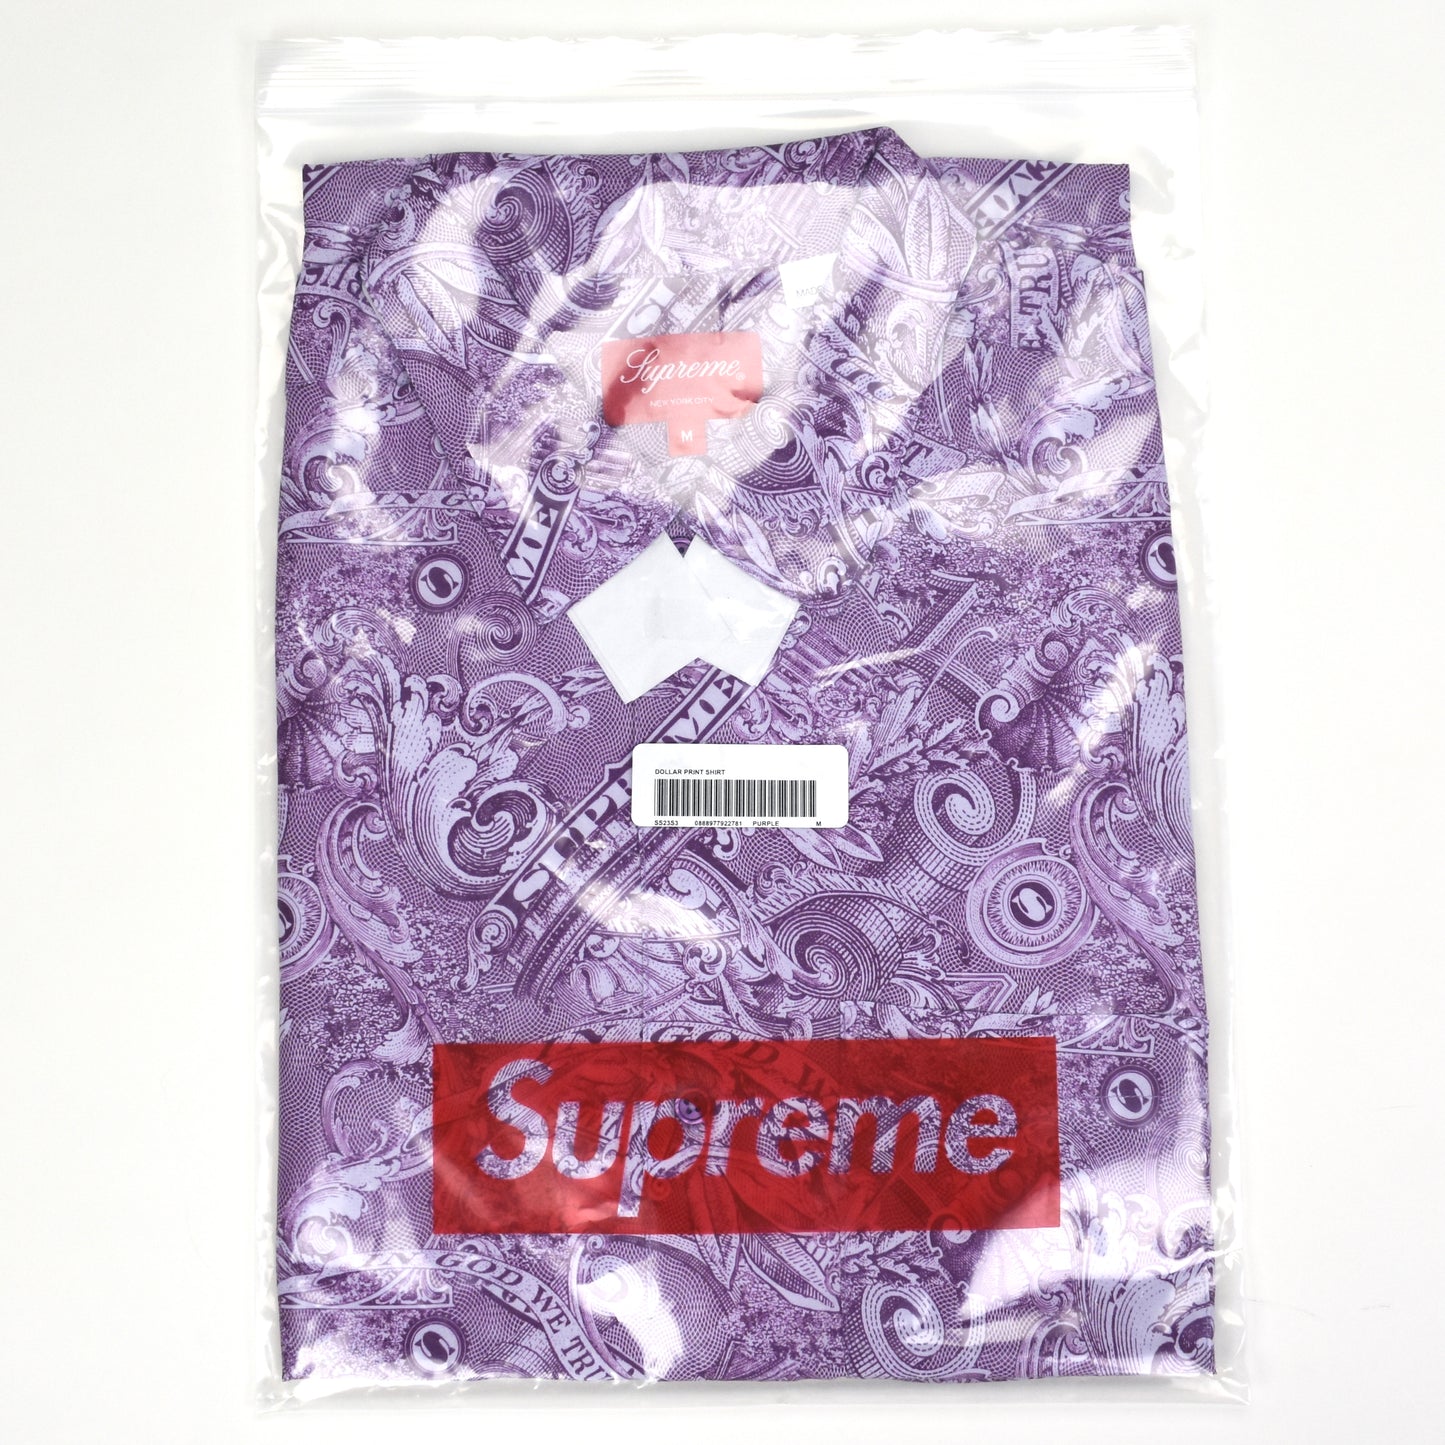 Supreme - Purple Dollar Bill Print Viscose Club Shirt